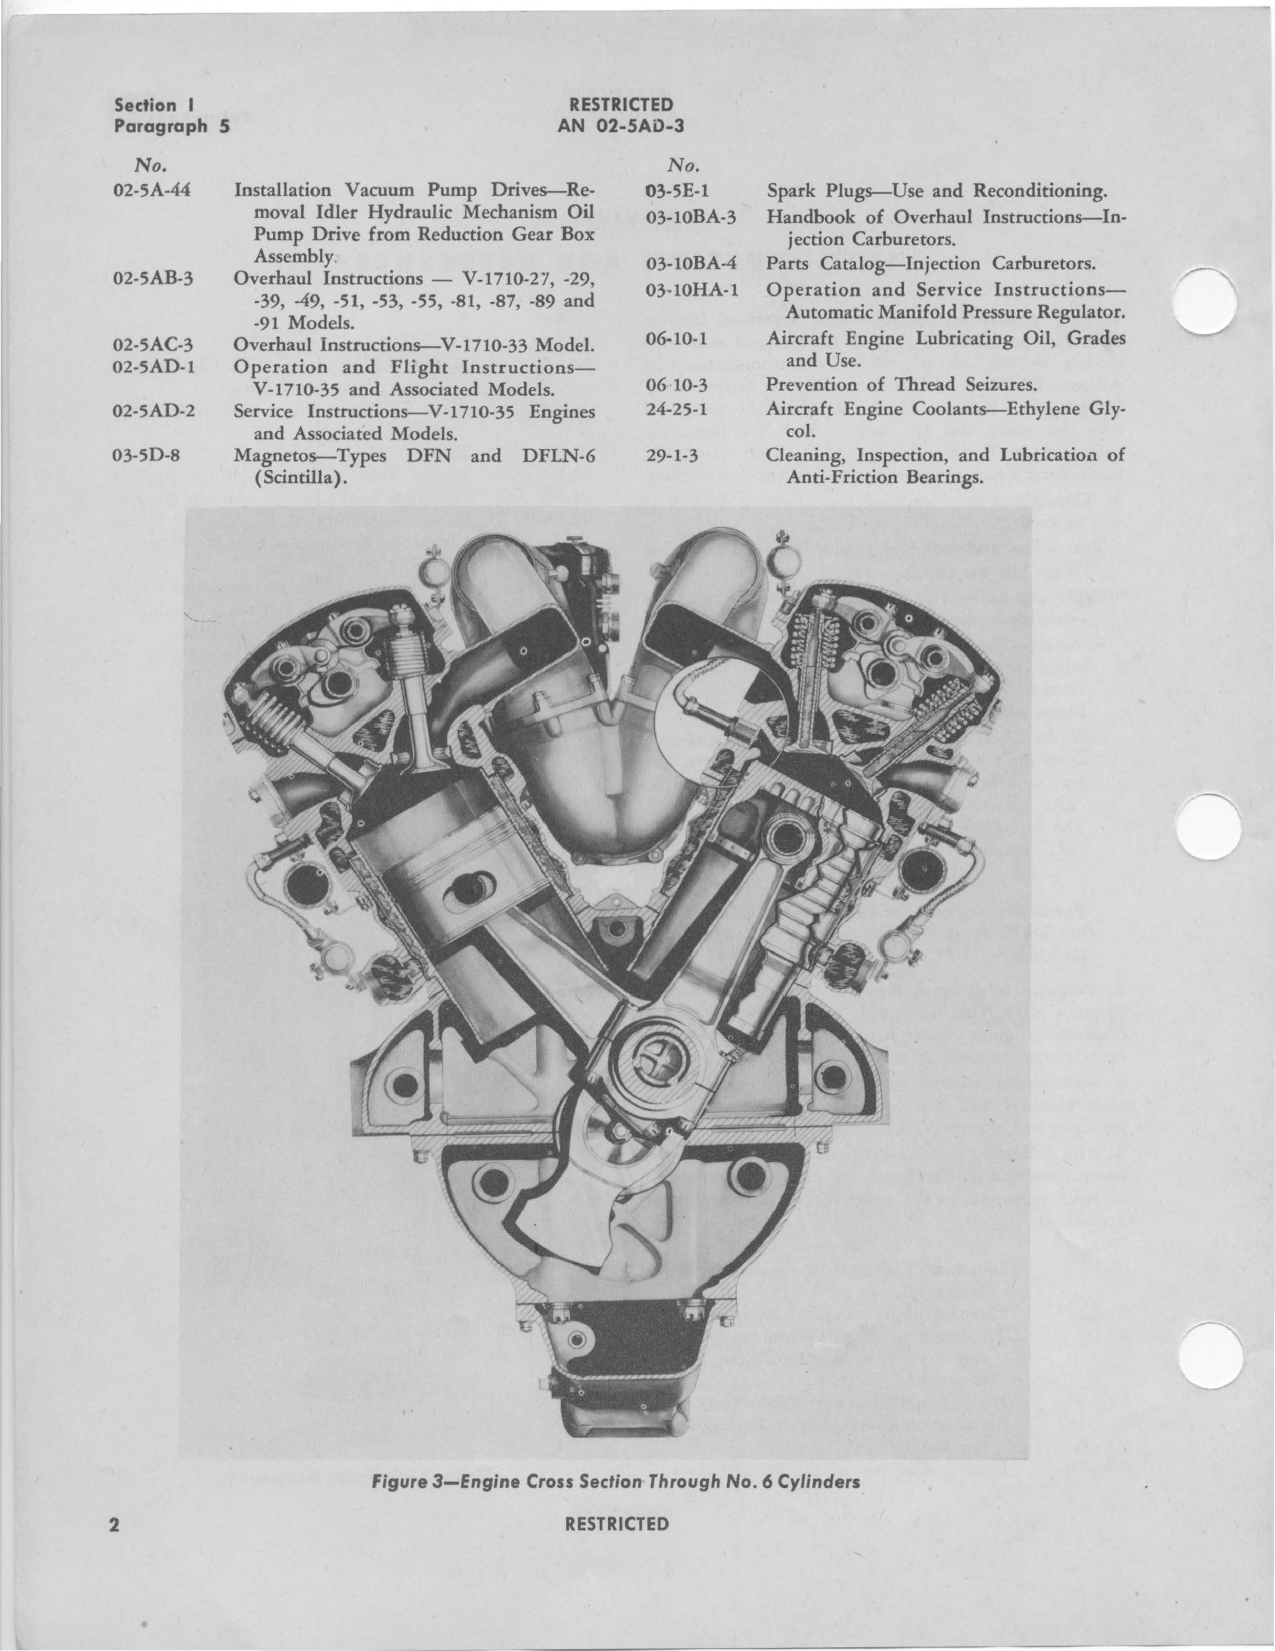 Sample page 8 from AirCorps Library document: Overhaul Instructions for V-1710-35, V-1710-63, V-1710-83, V-1710-85 and V-1710-93